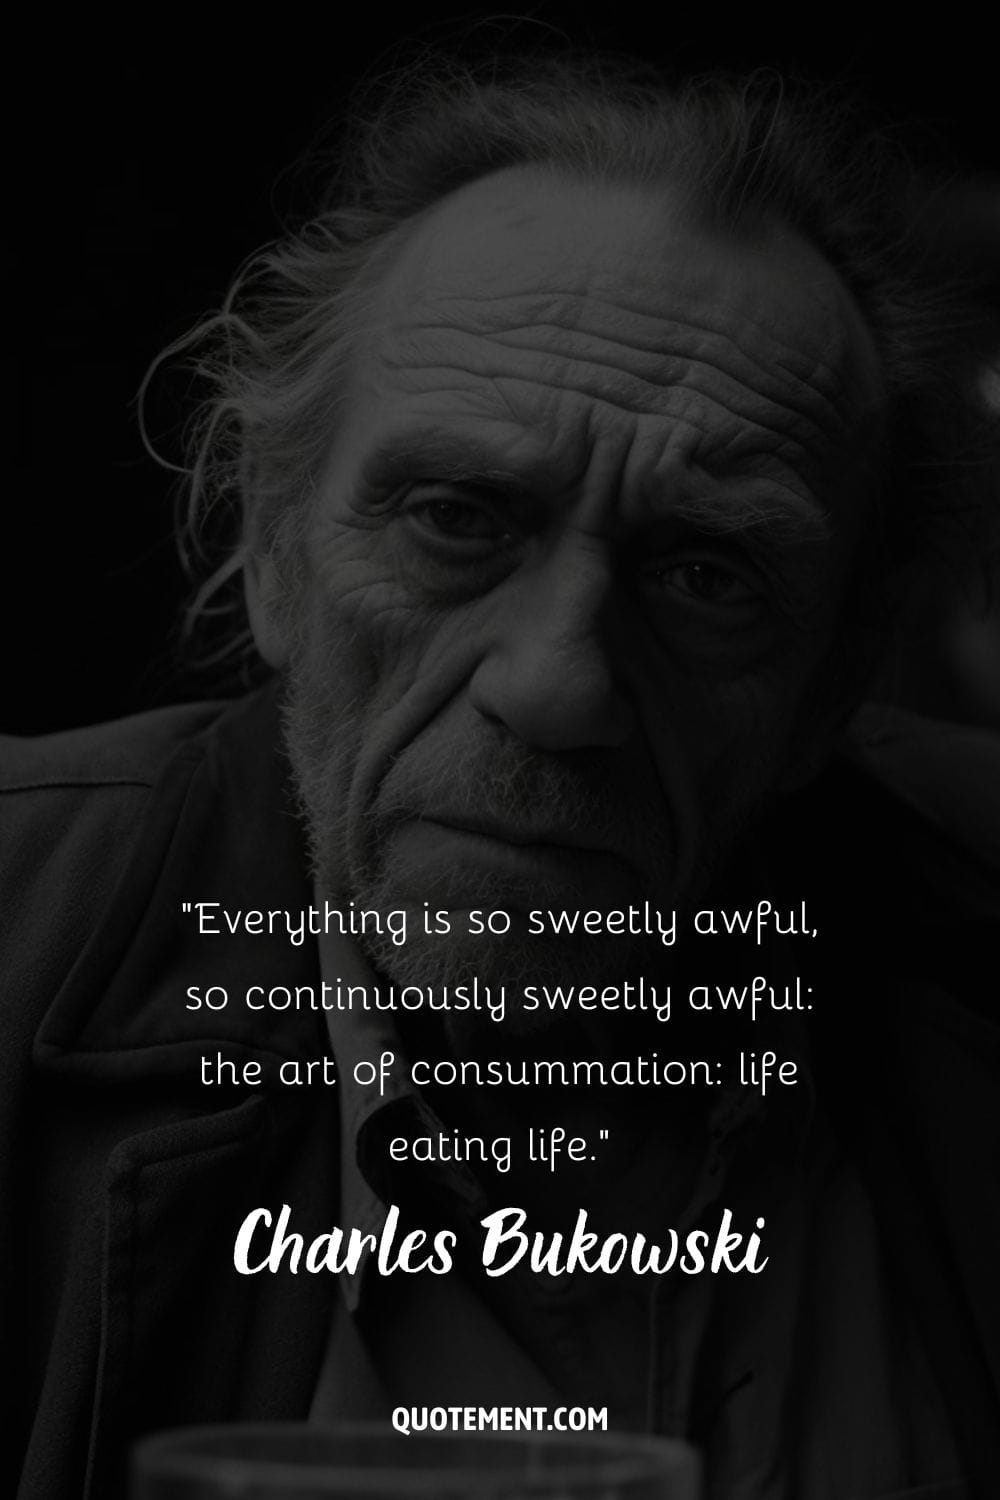 Charles Bukowski's contemplative and focused demeanor